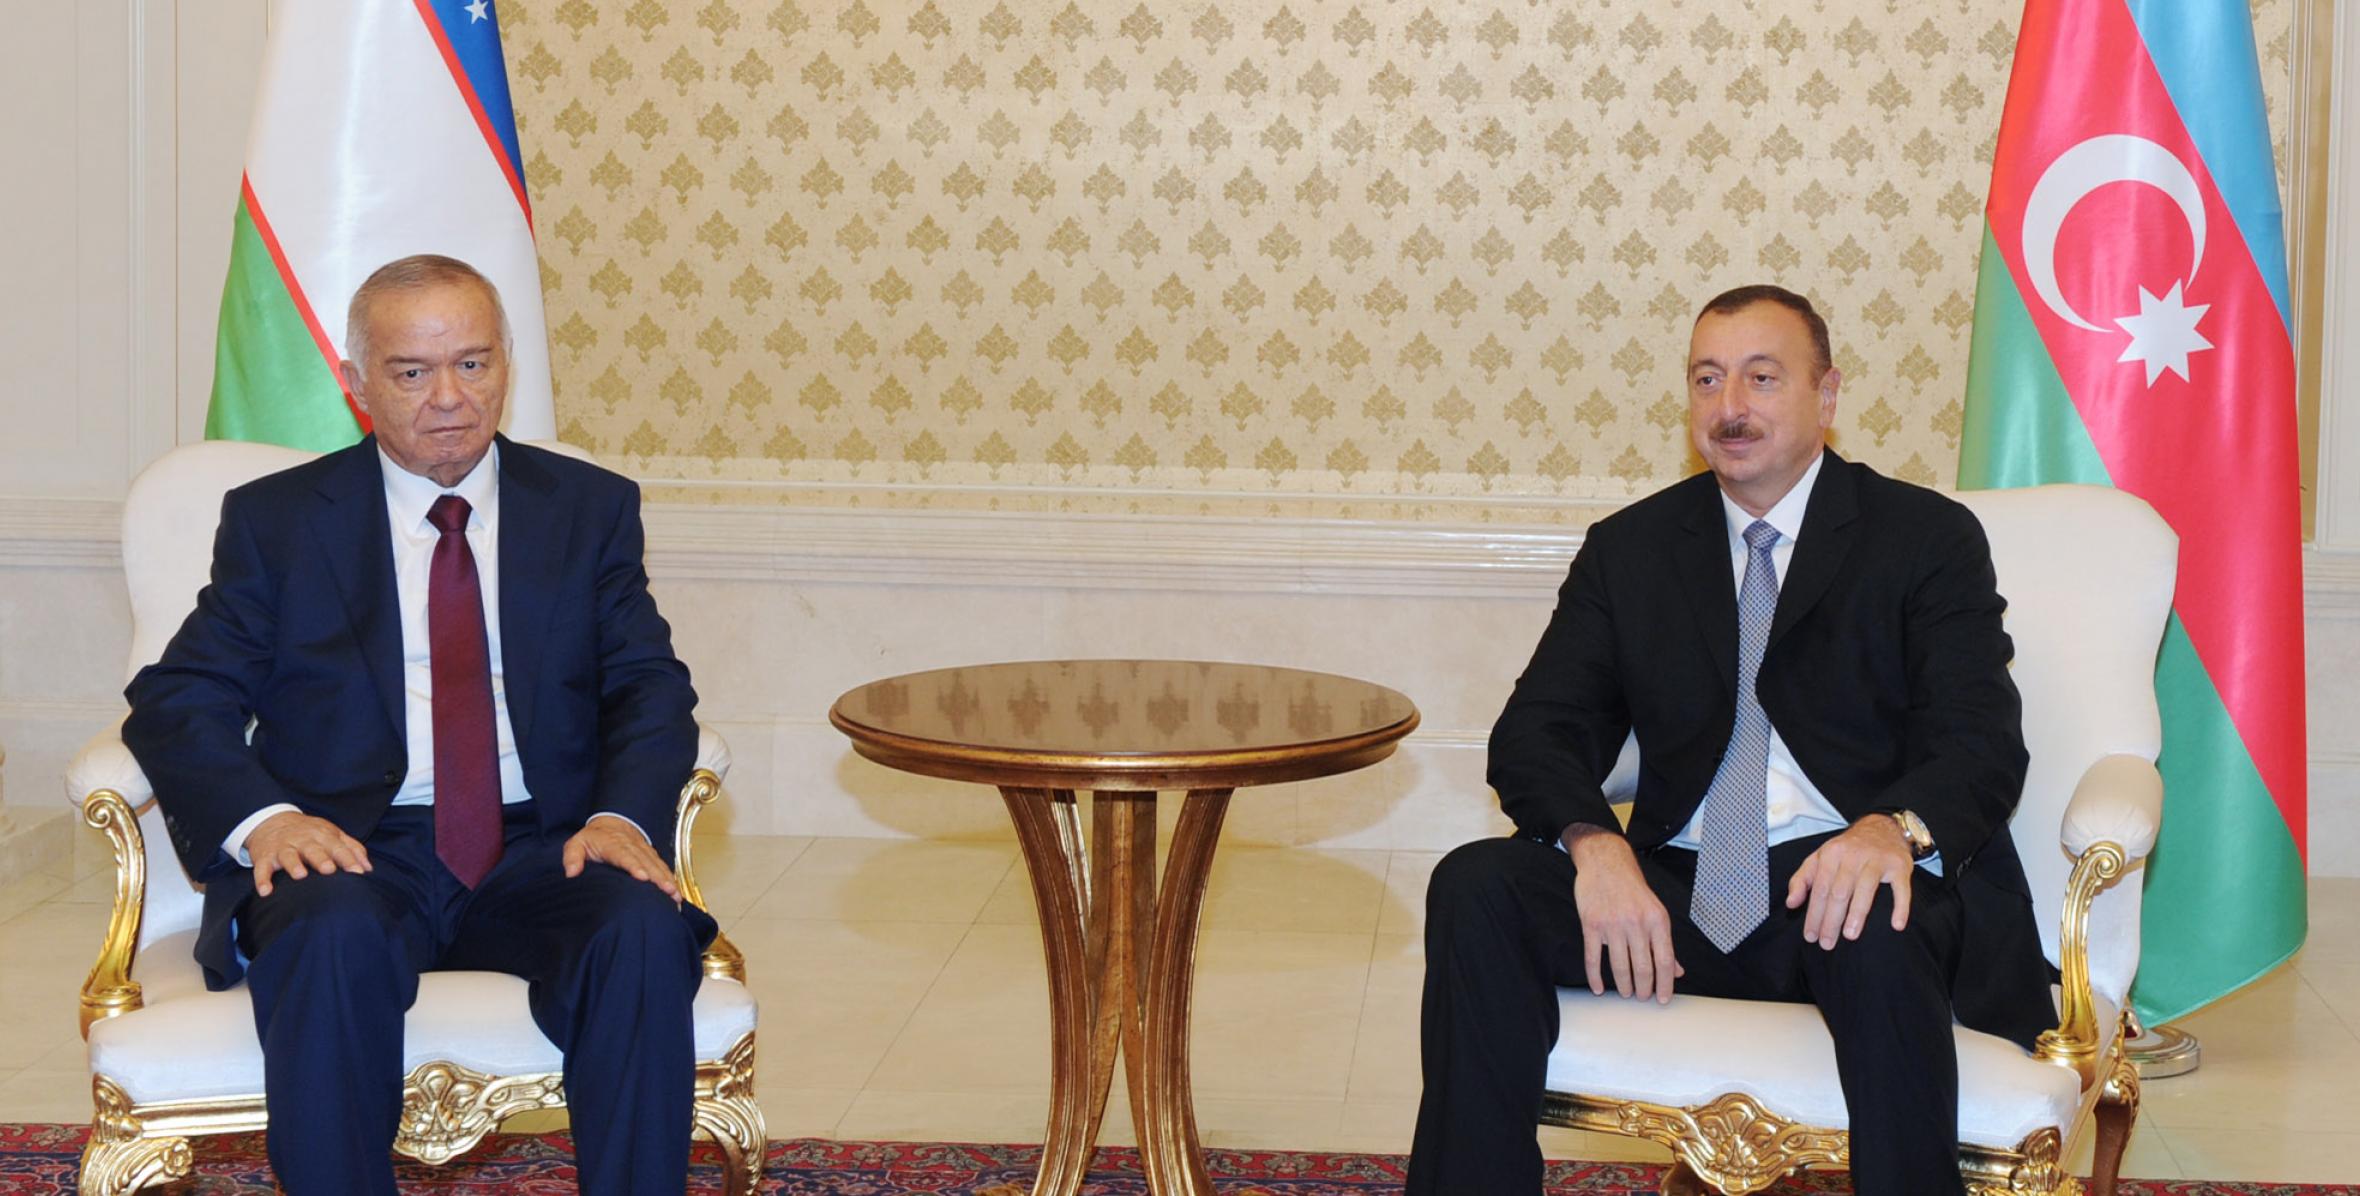 Ilham Aliyev and President of Uzbekistan Islam Karimov had a face-to-face meeting